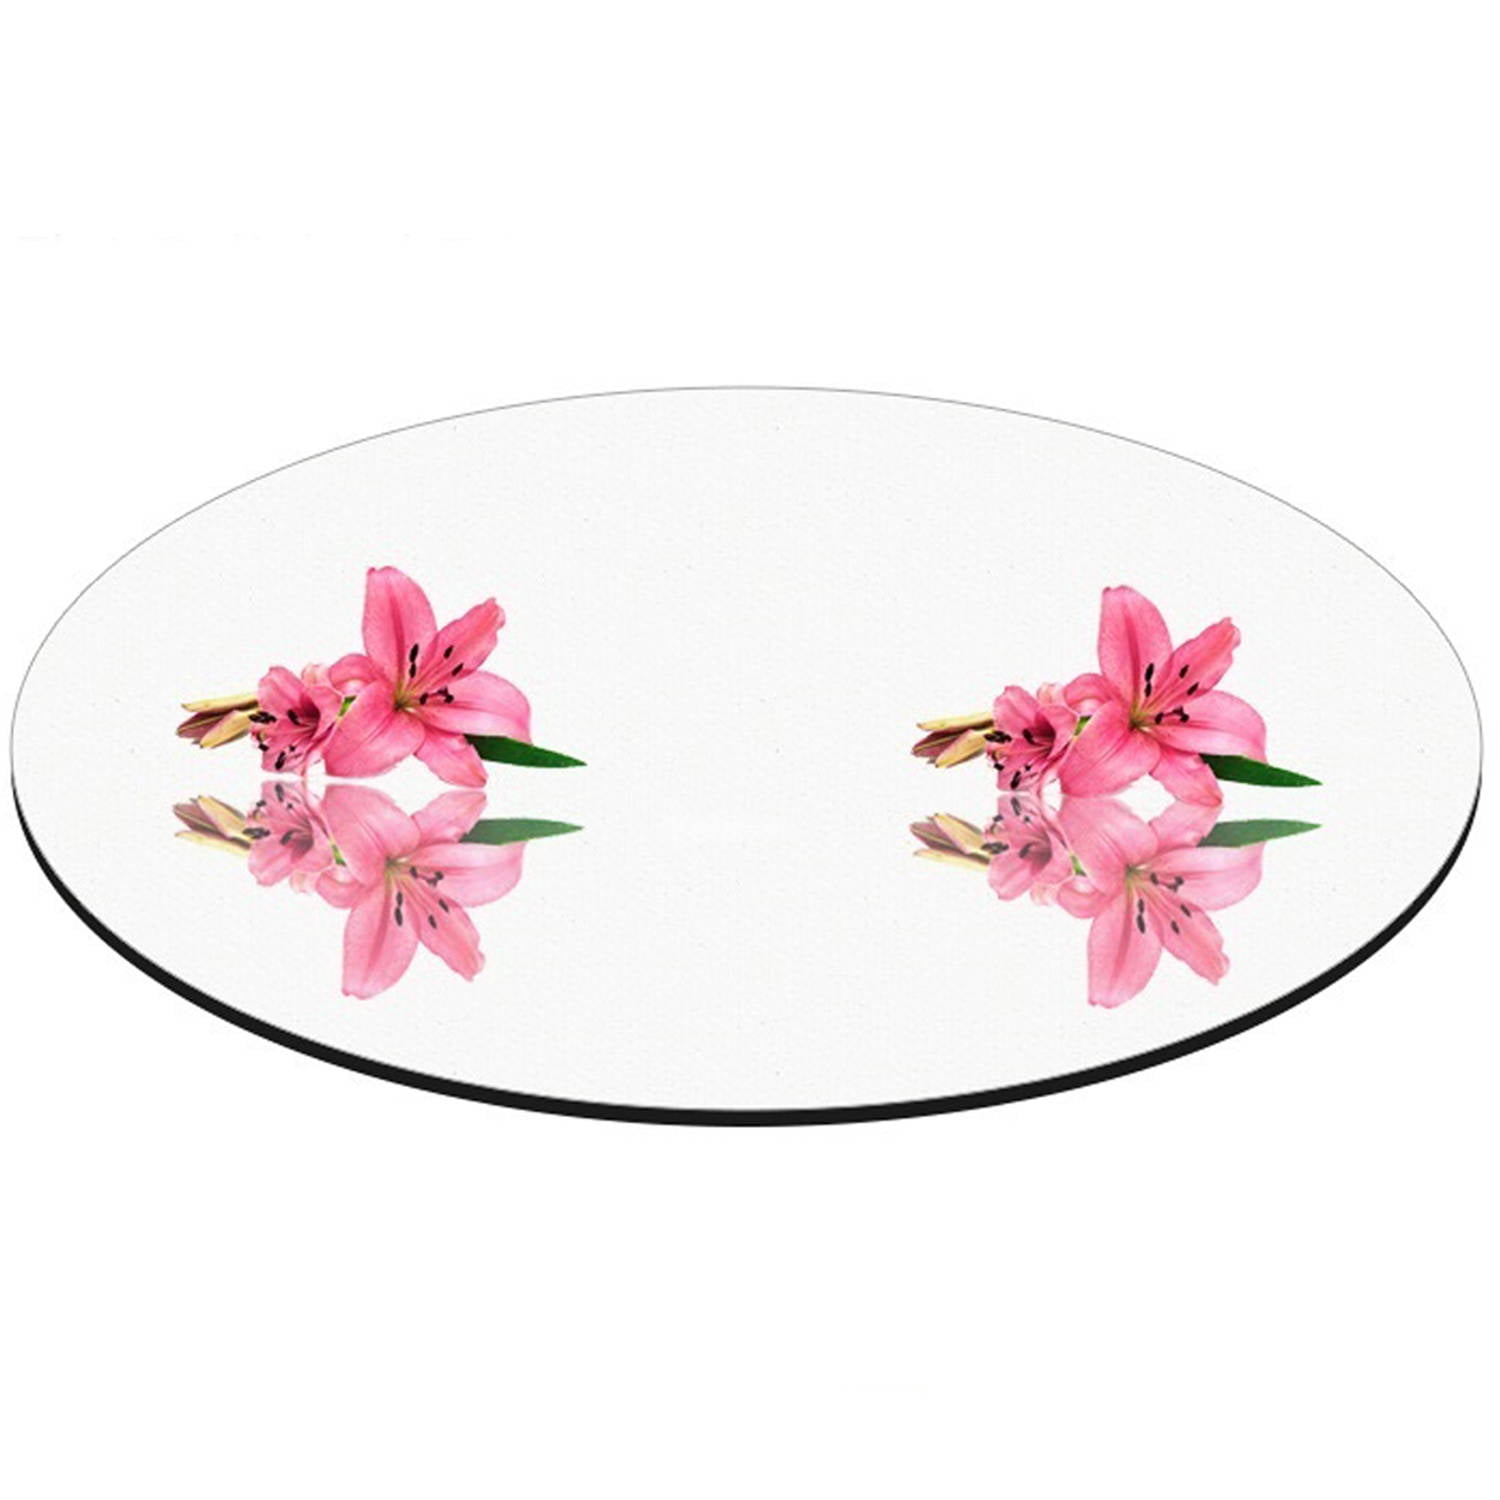 Darice Round Mirror Wedding Table Centerpieces Sanded Egdes 10 Pieces 12 Inches 